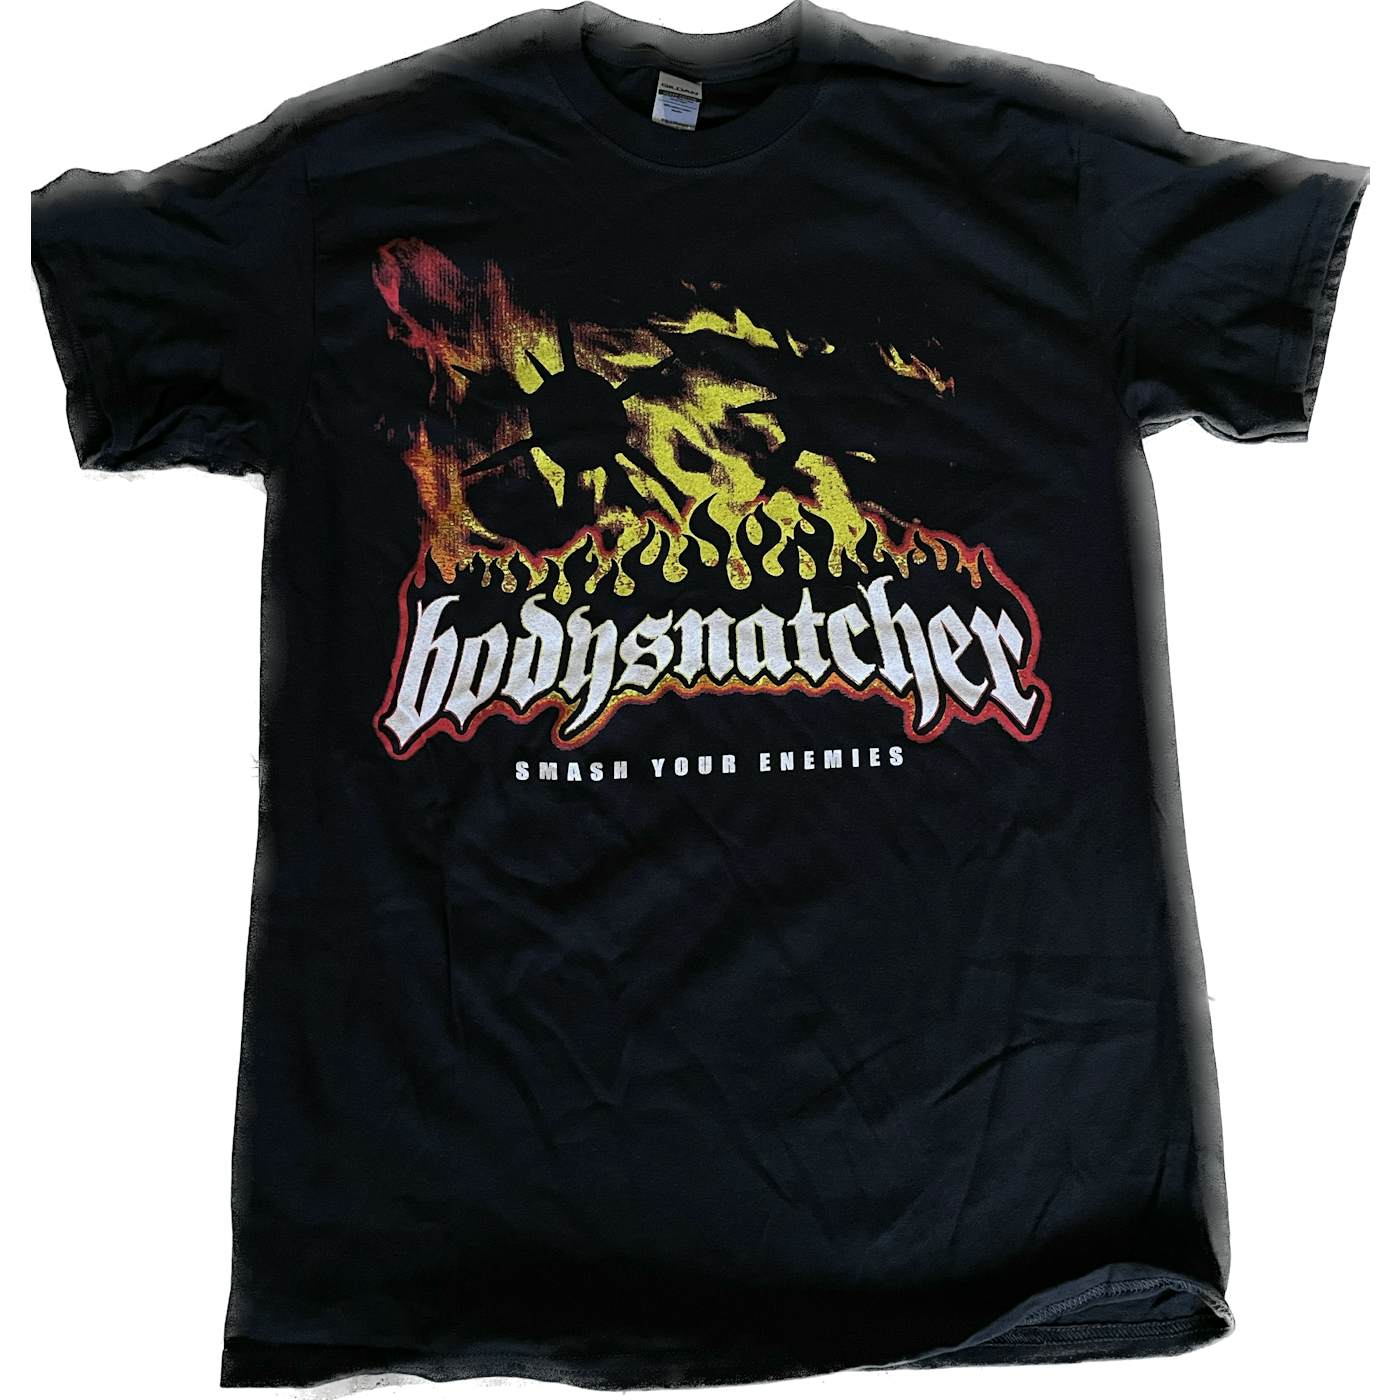 Bodysnatcher Hatebreed Rip T-shirt